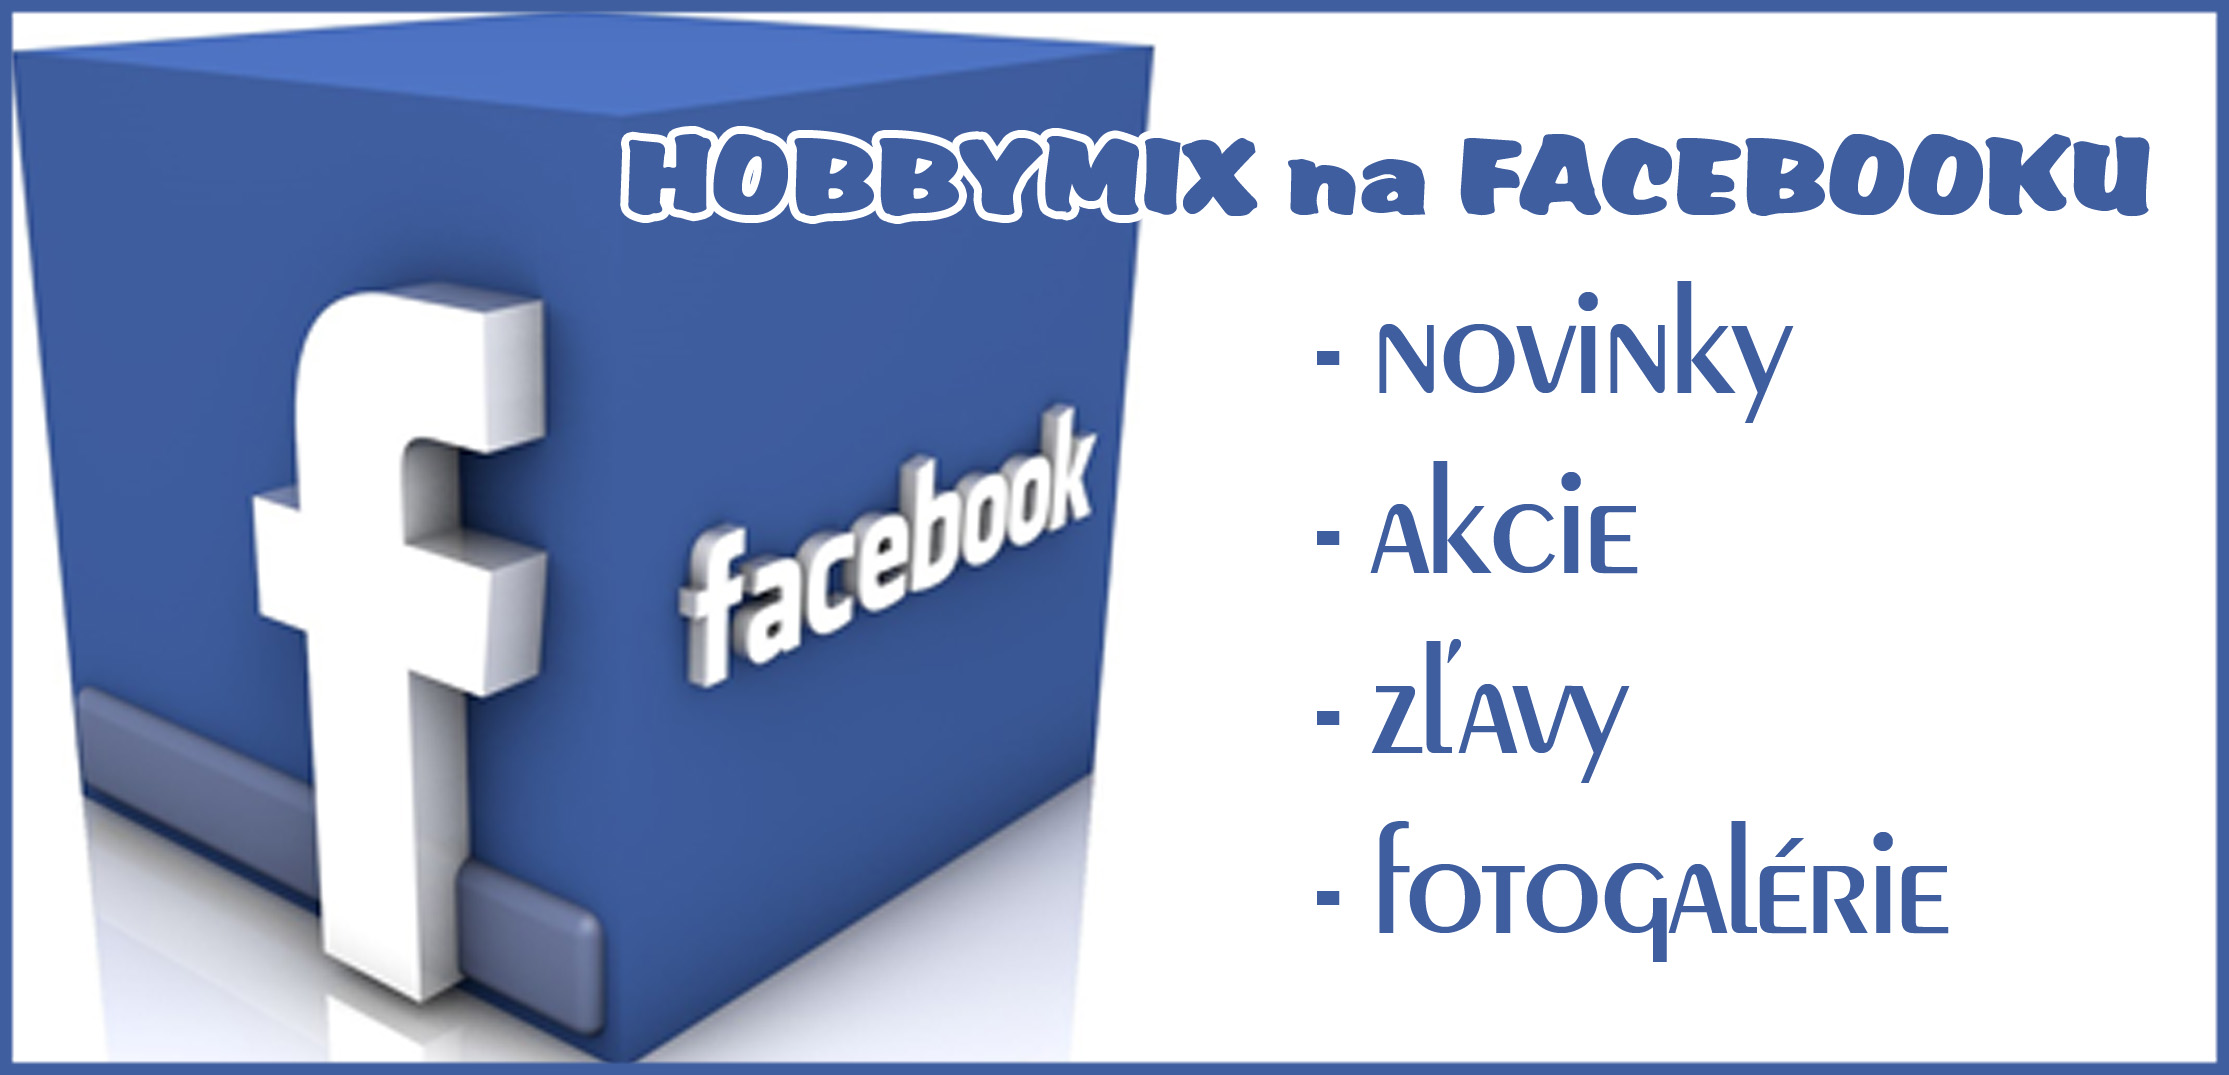 Hobbymix na Facebooku